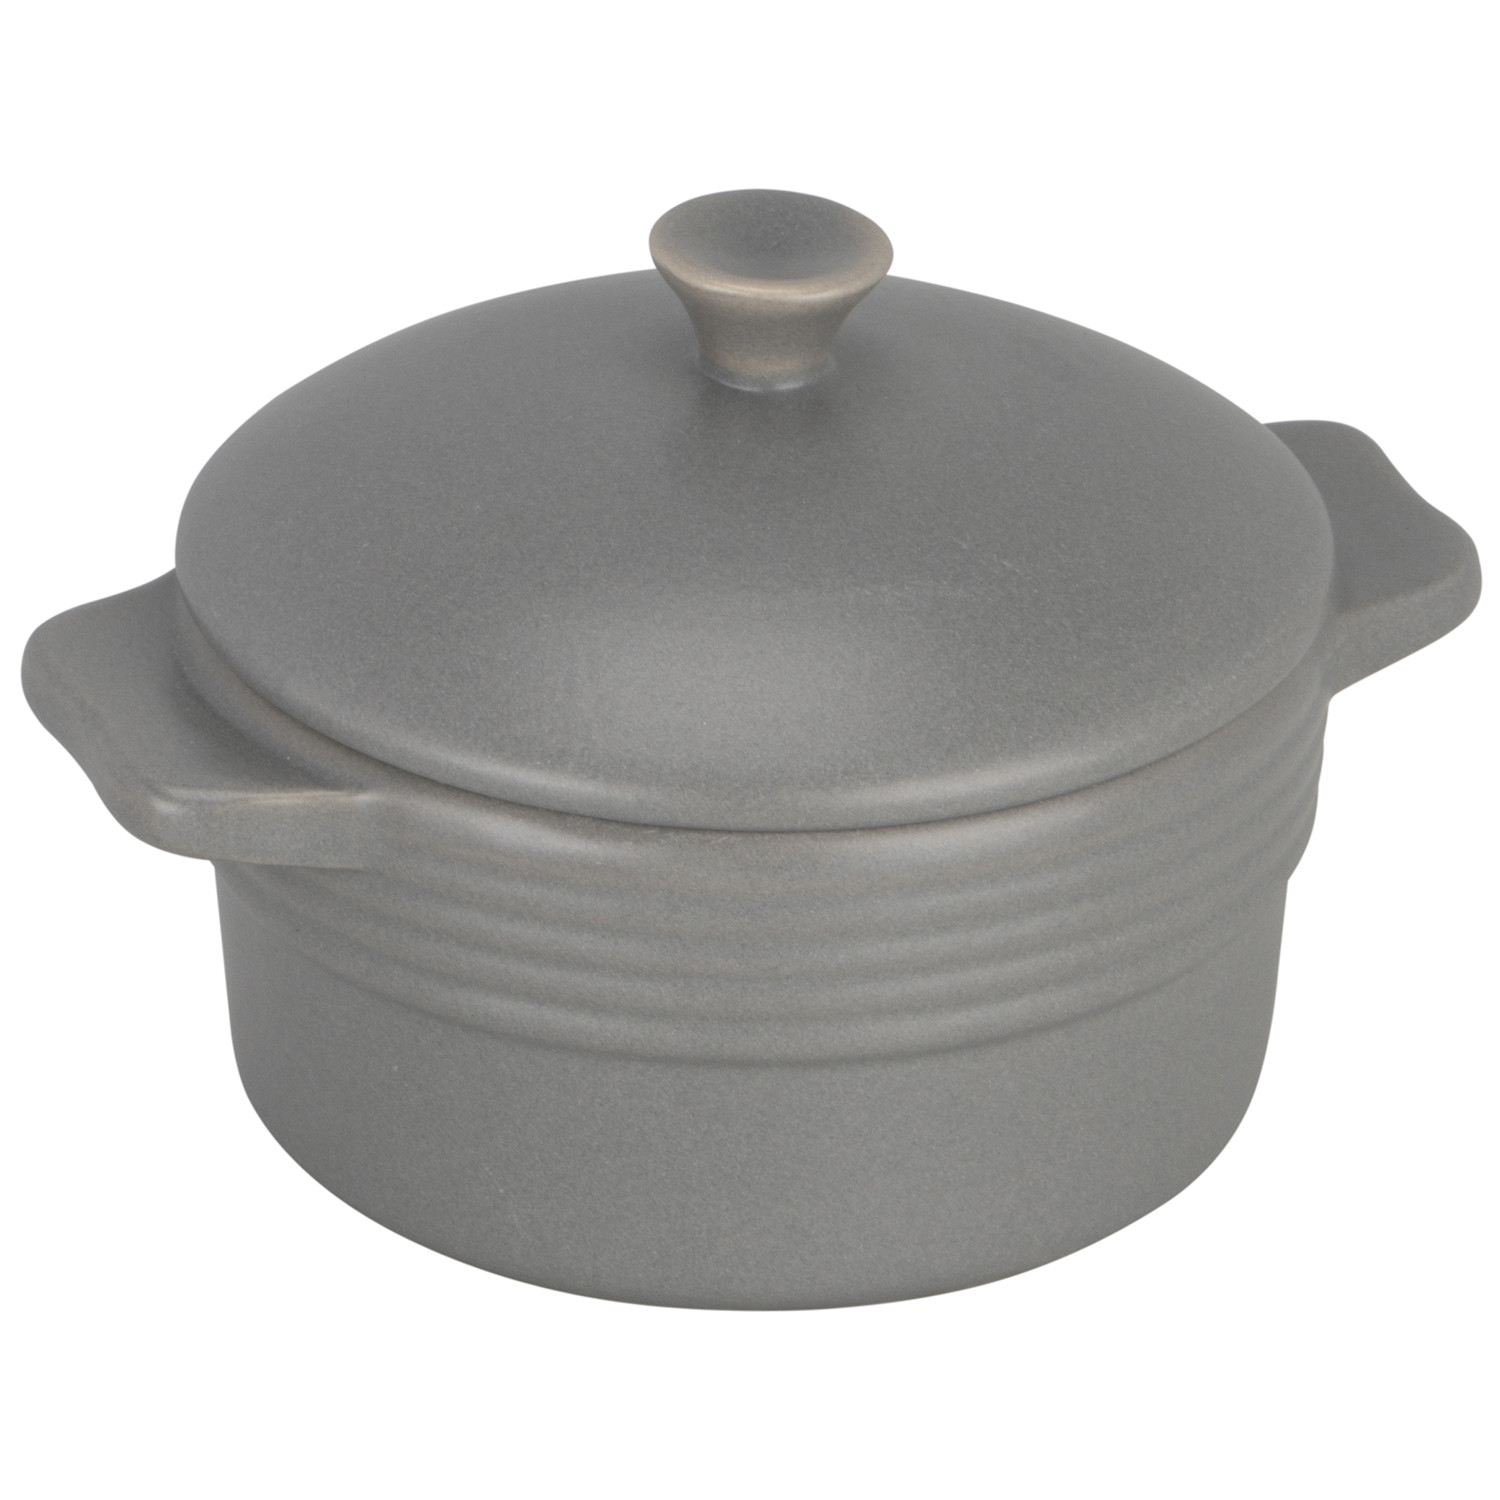 MY Grey Casserole Dish Image 1